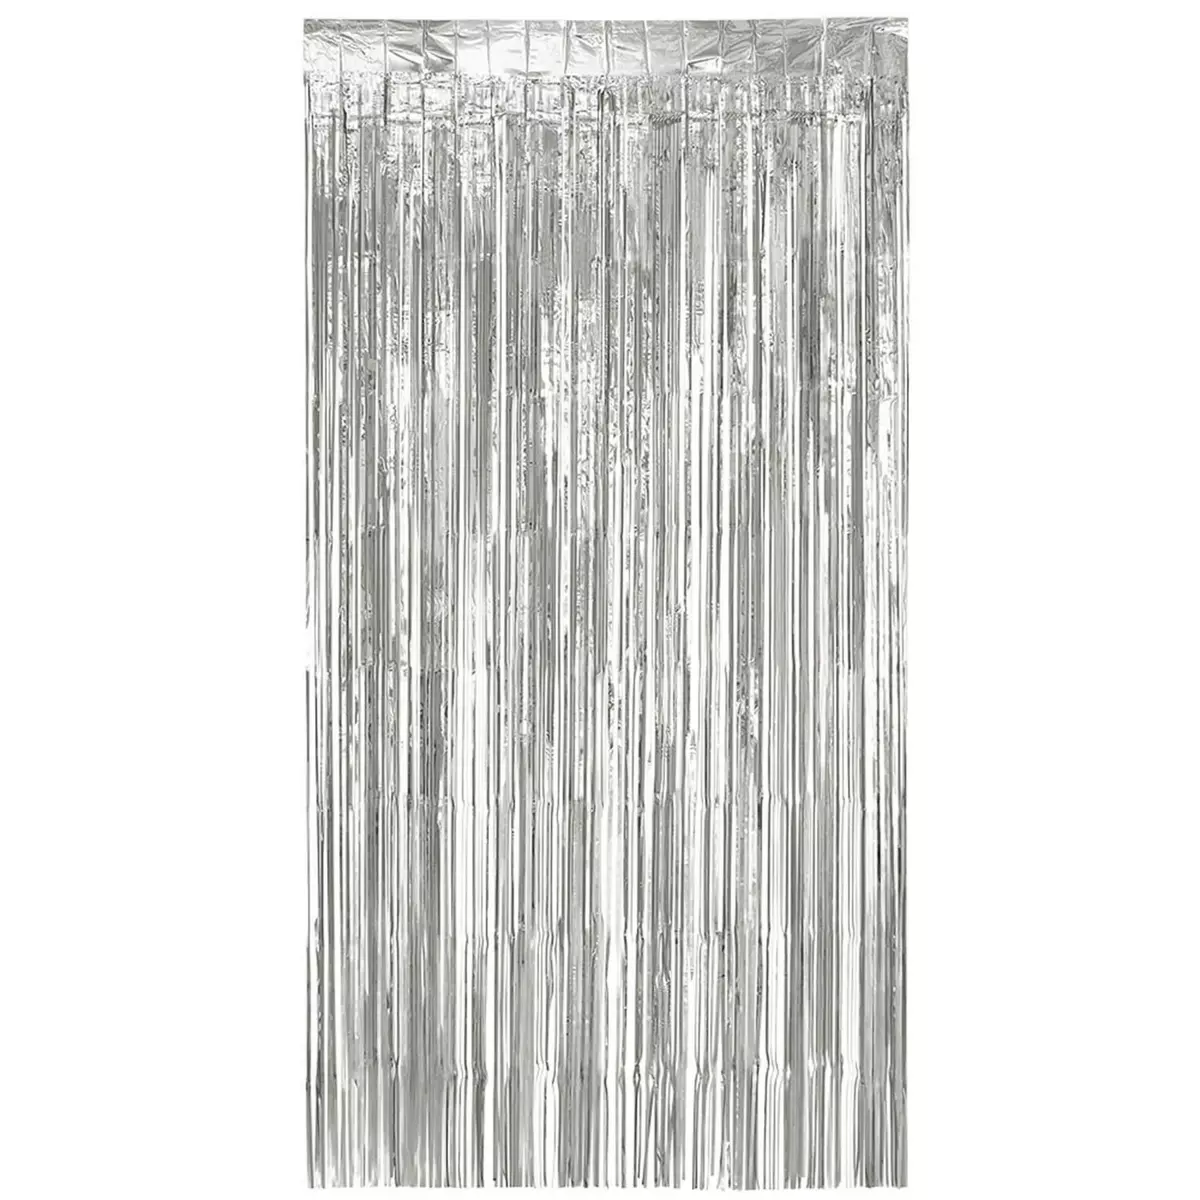 Boland Rideau en aluminium argent métallique - 200 x 100 cm